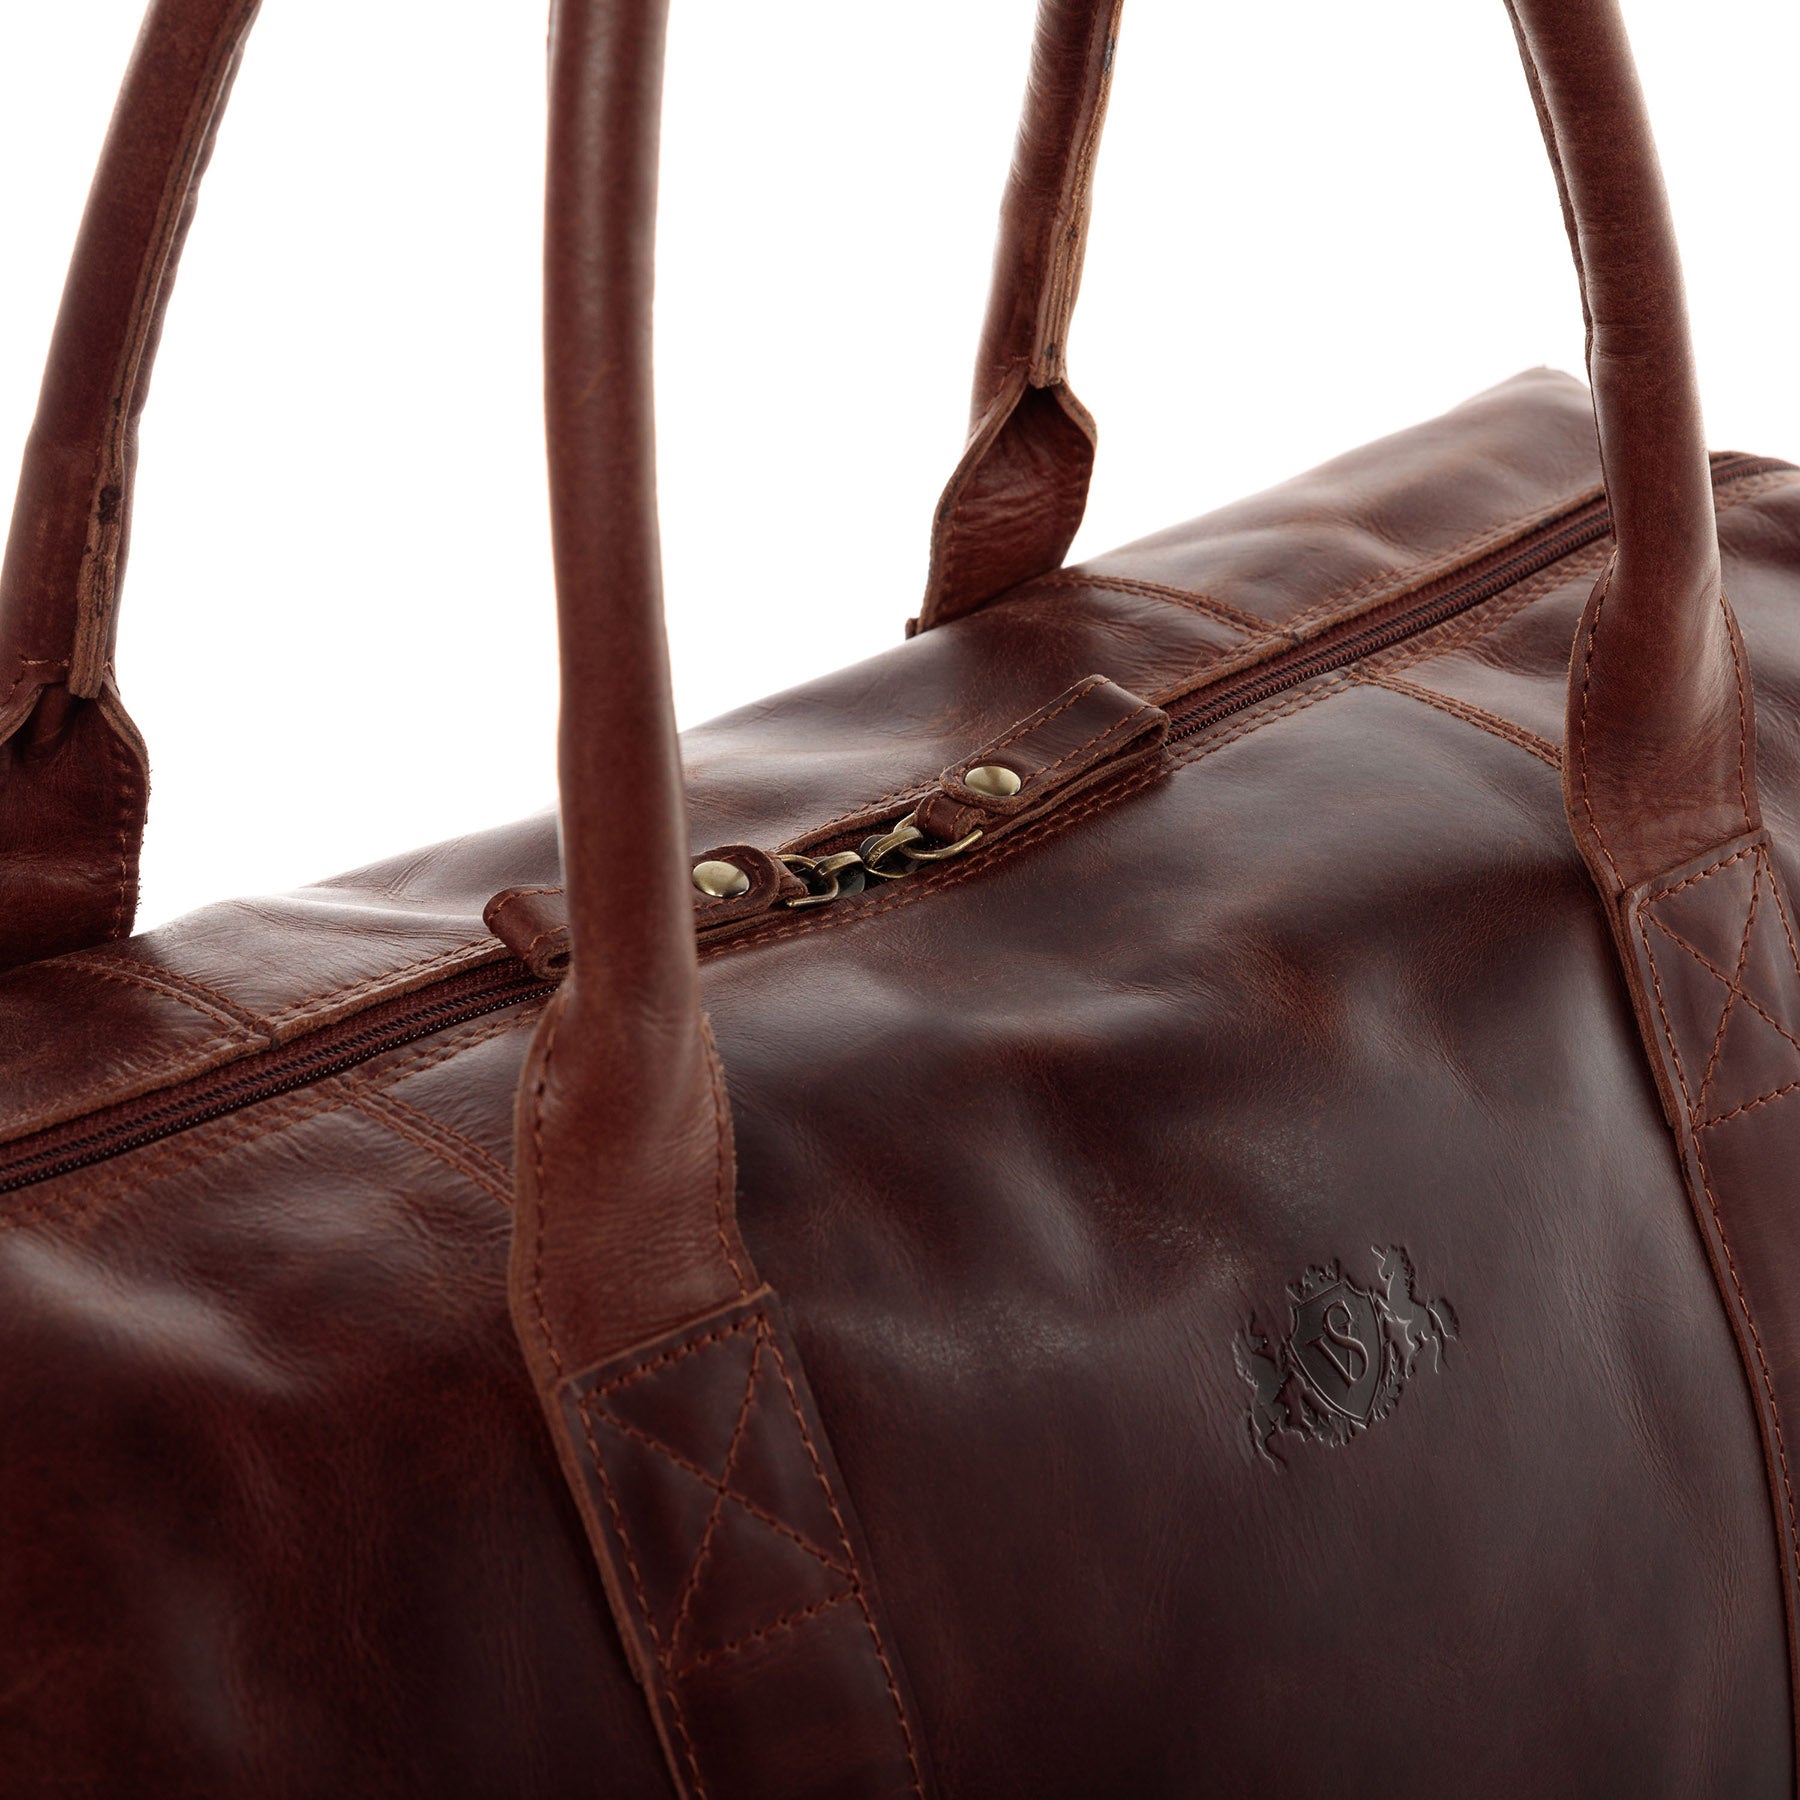 SID & VAIN travel bag YALE ZIP natural leather brown cognac sports bag travel bag